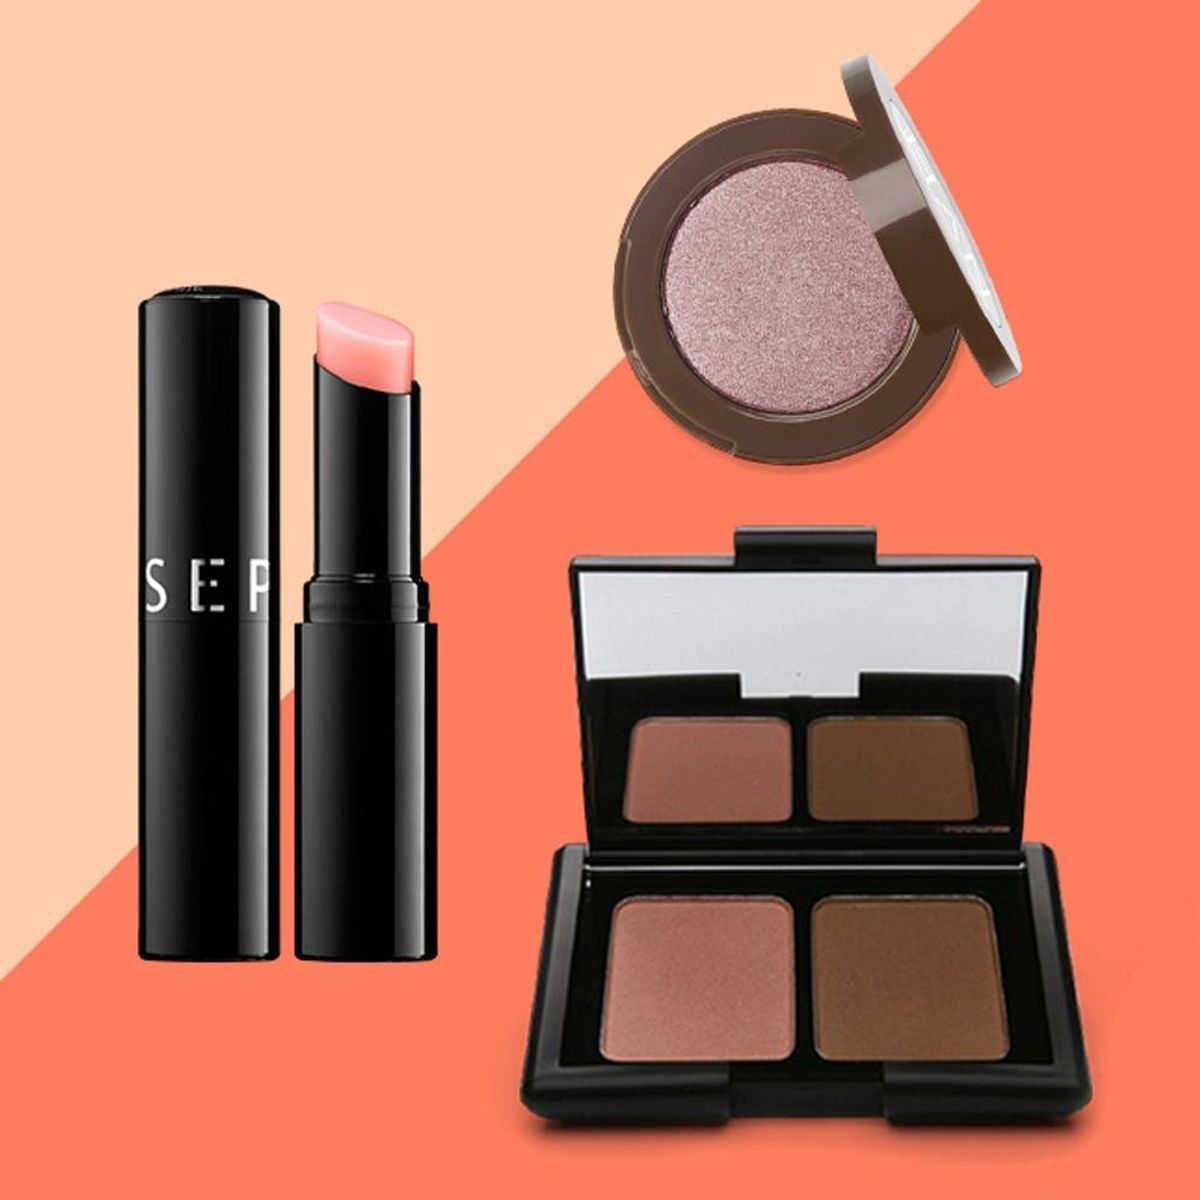 6 Weekend Makeup Essentials for Under $15